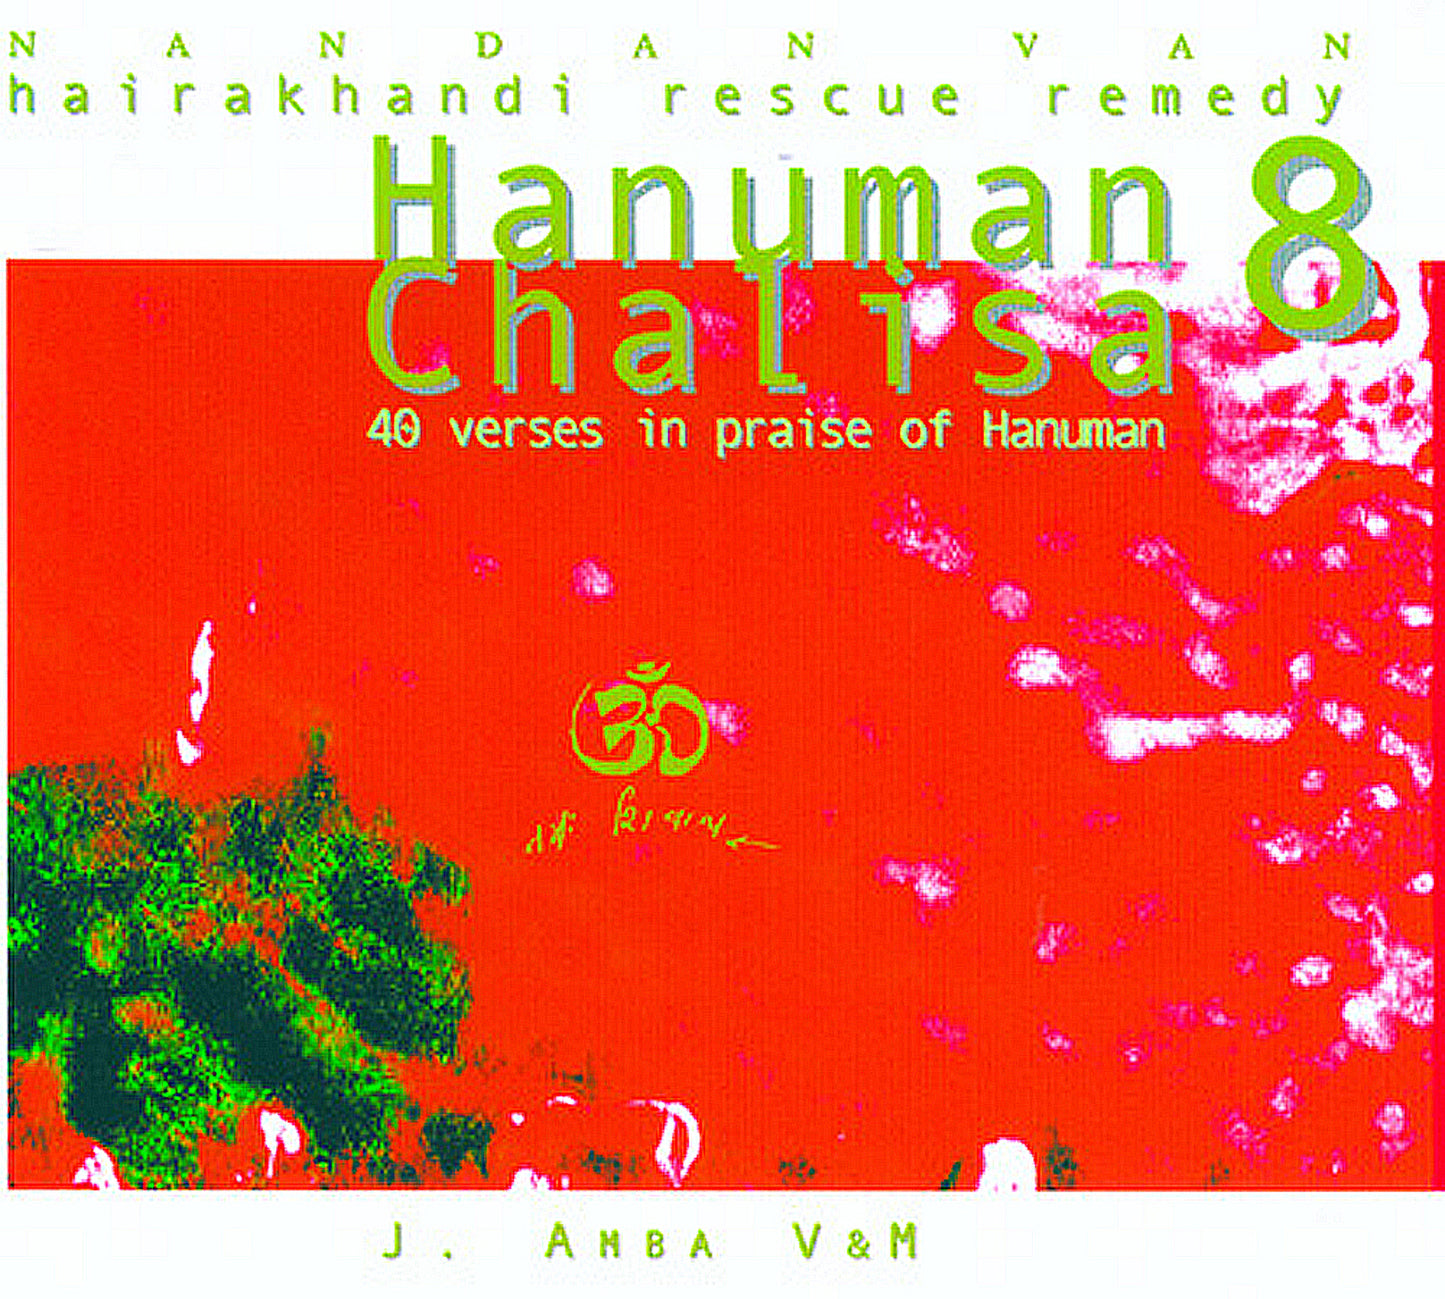 Hanuman Chalisa, 40 Verses in praise of Hanuman, Bhajans - Sanatan Dharma Spirituality Music Therapy for Meditation